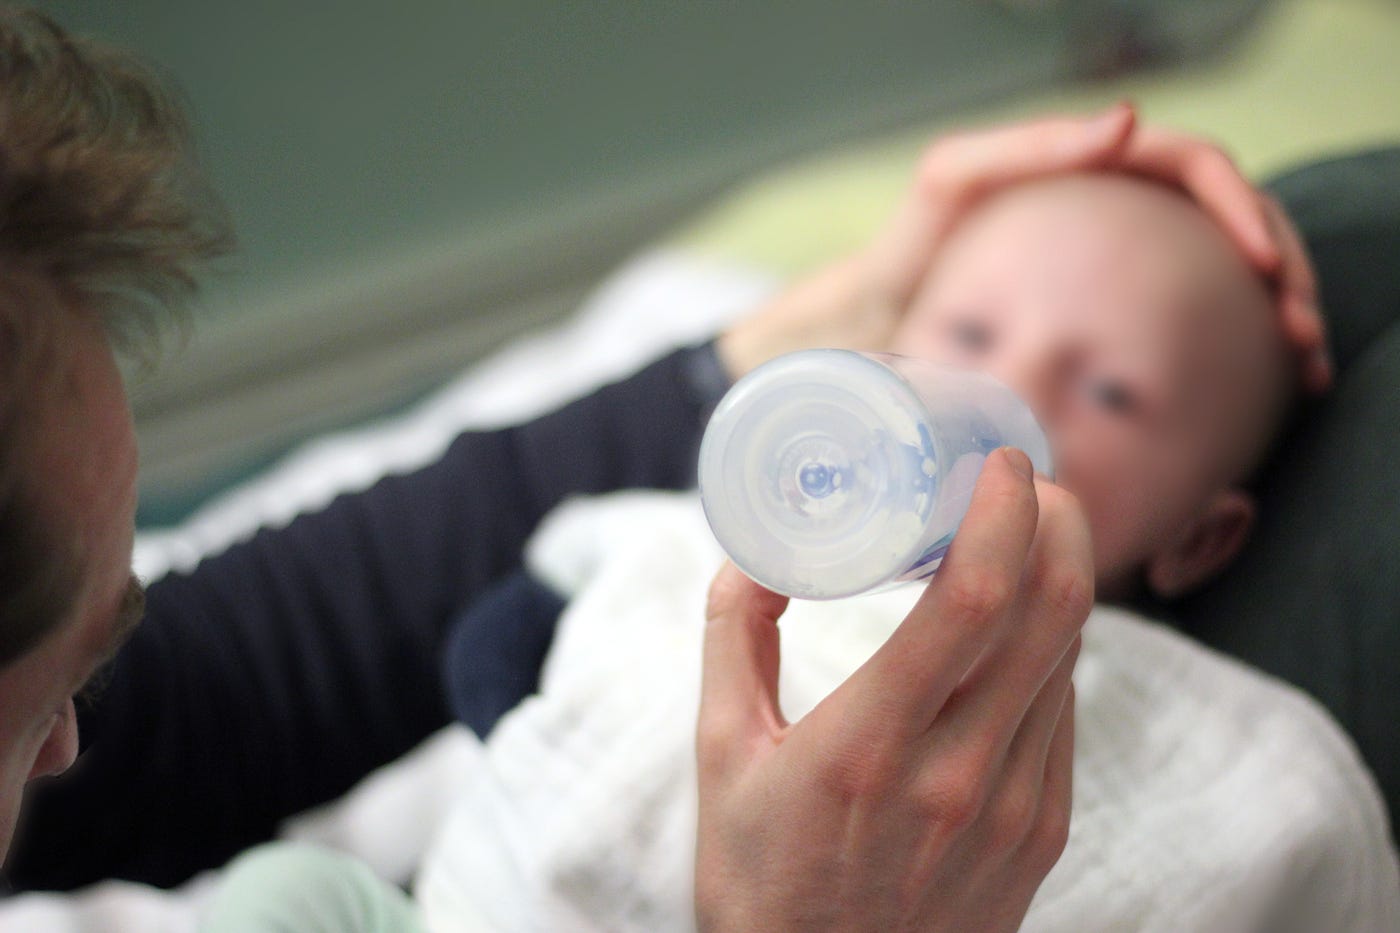 Baby hot water bottle - Raising-independent-kids